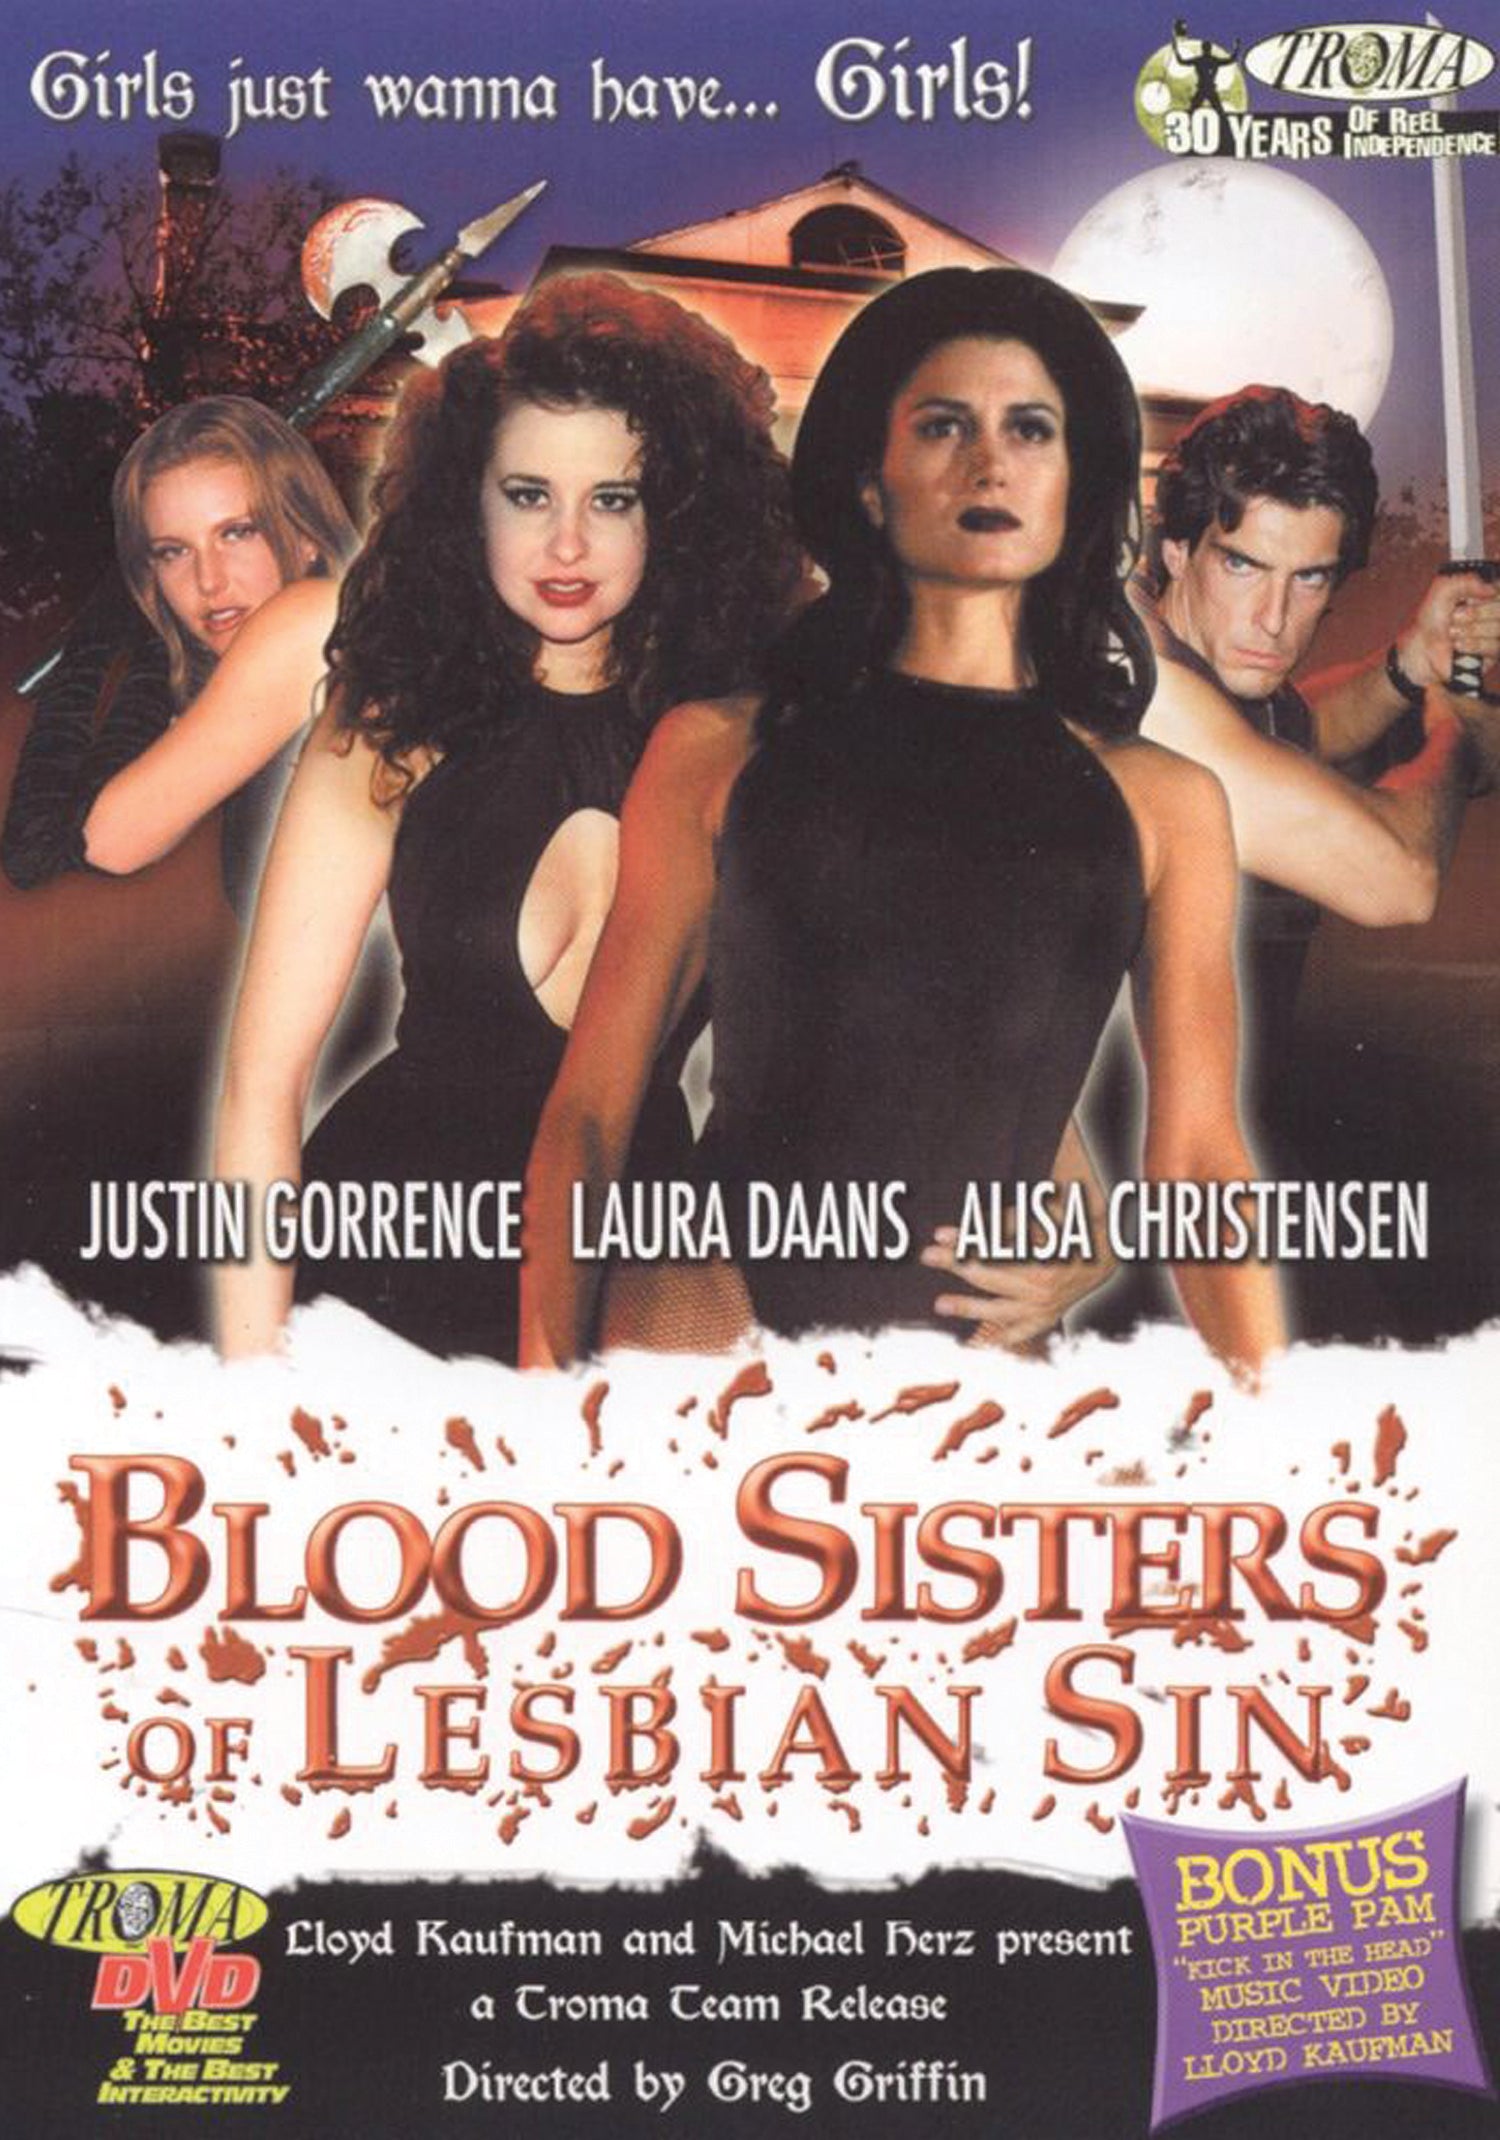 BLOOD SISTERS OF LESBIAN SIN DVD